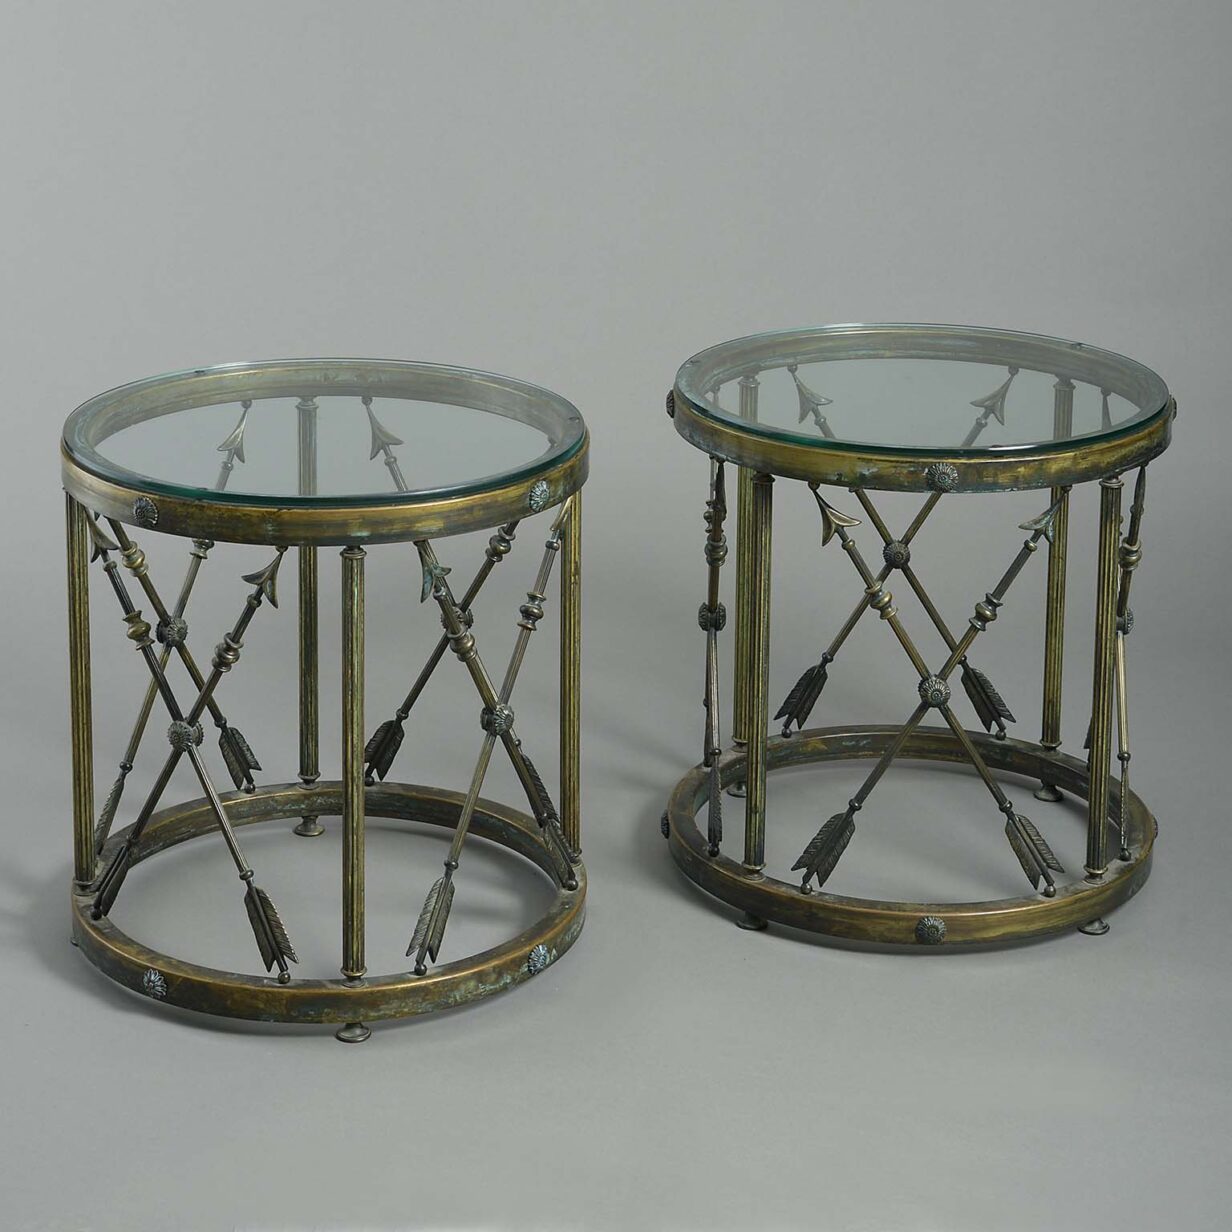 Pair of drum tables